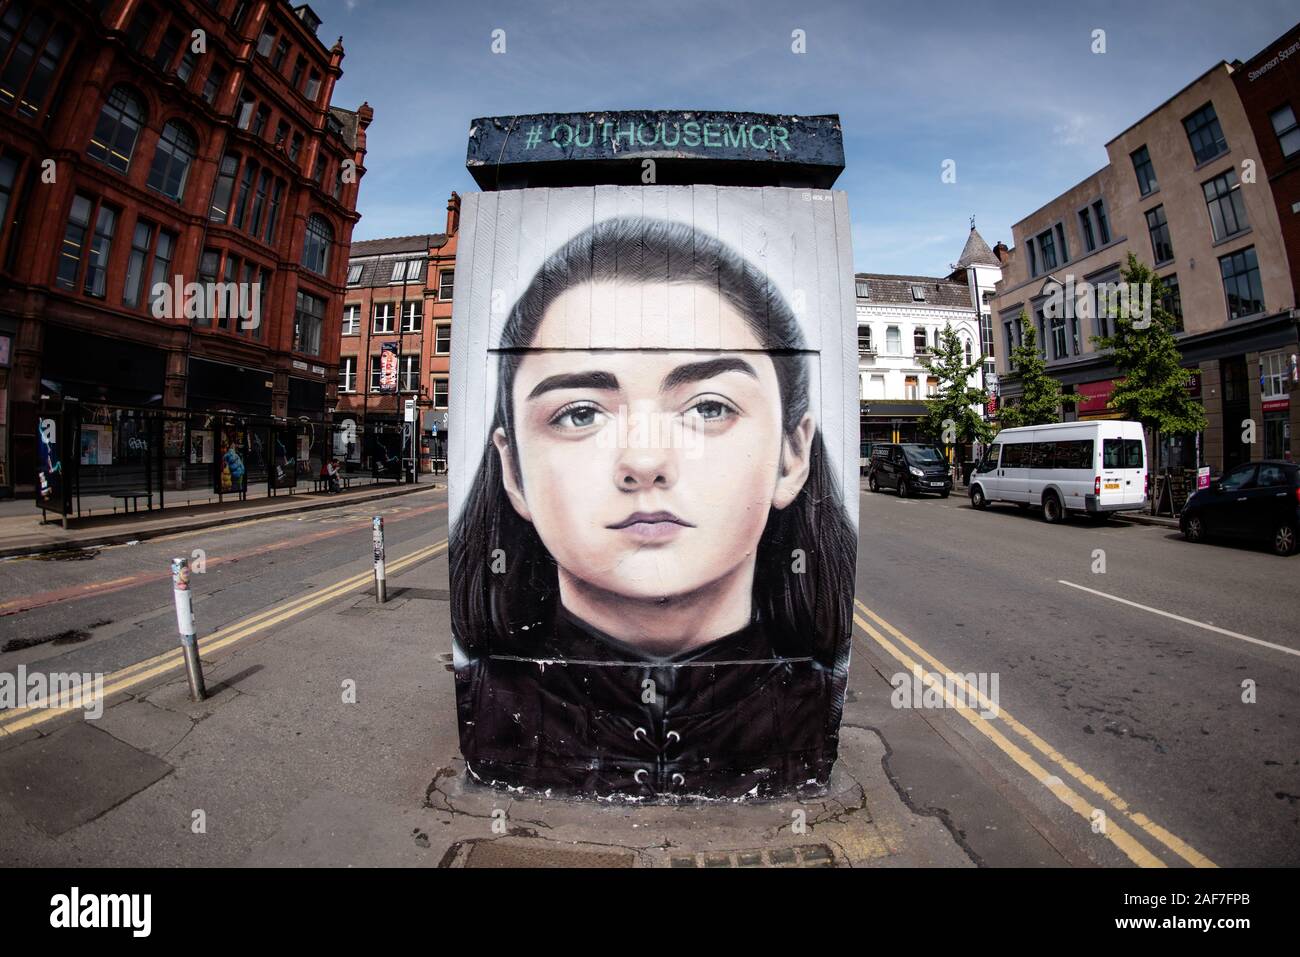 Juego de Tronos personaje Arya Stark Street art por Akse p19. Stevenson Sq, Barrio Norte, Manchester. Foto de stock